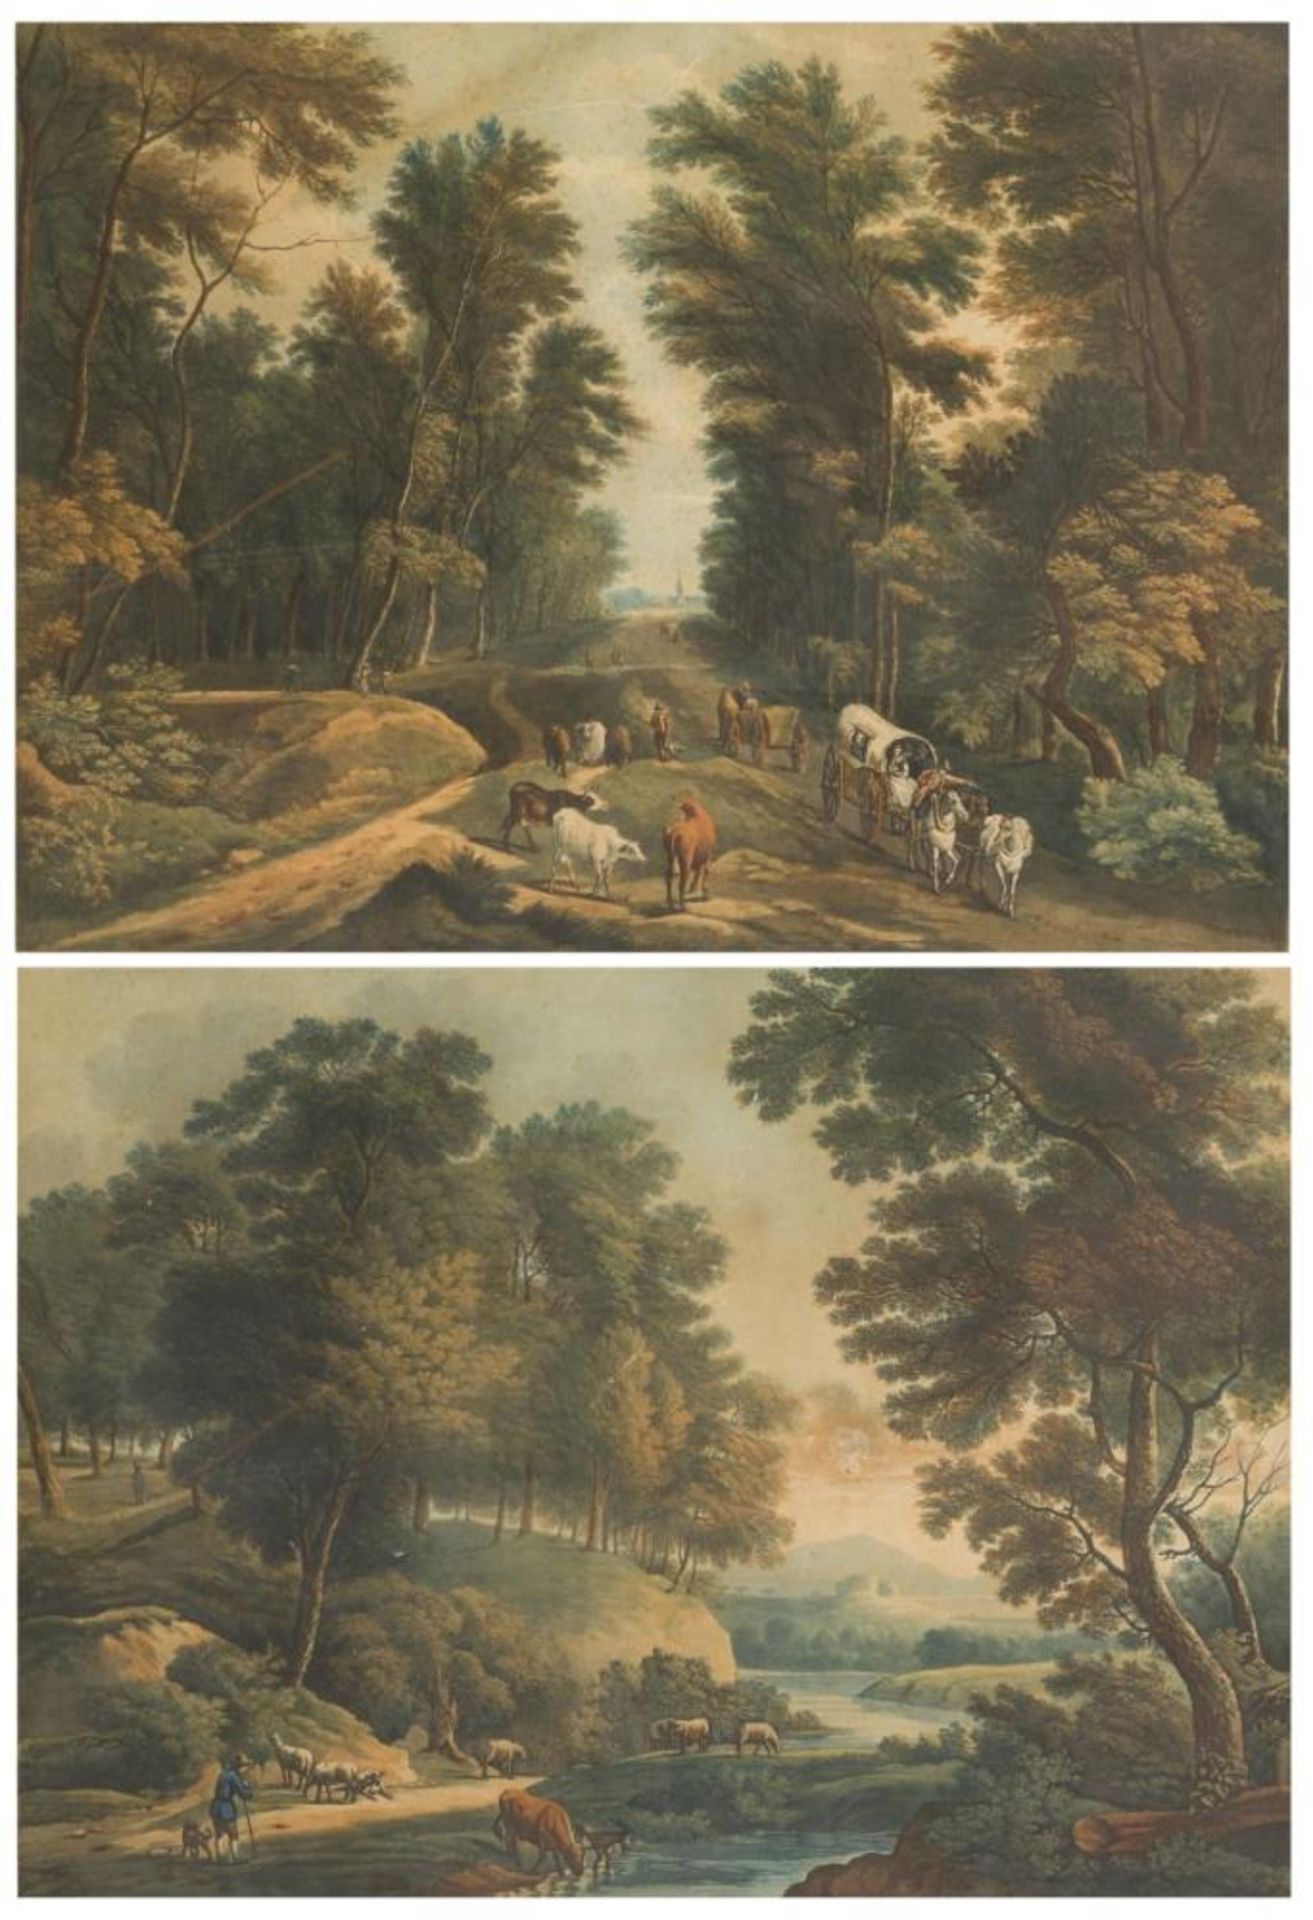 A set comprising (2) engravings, coloured (forest) landscapes, England.